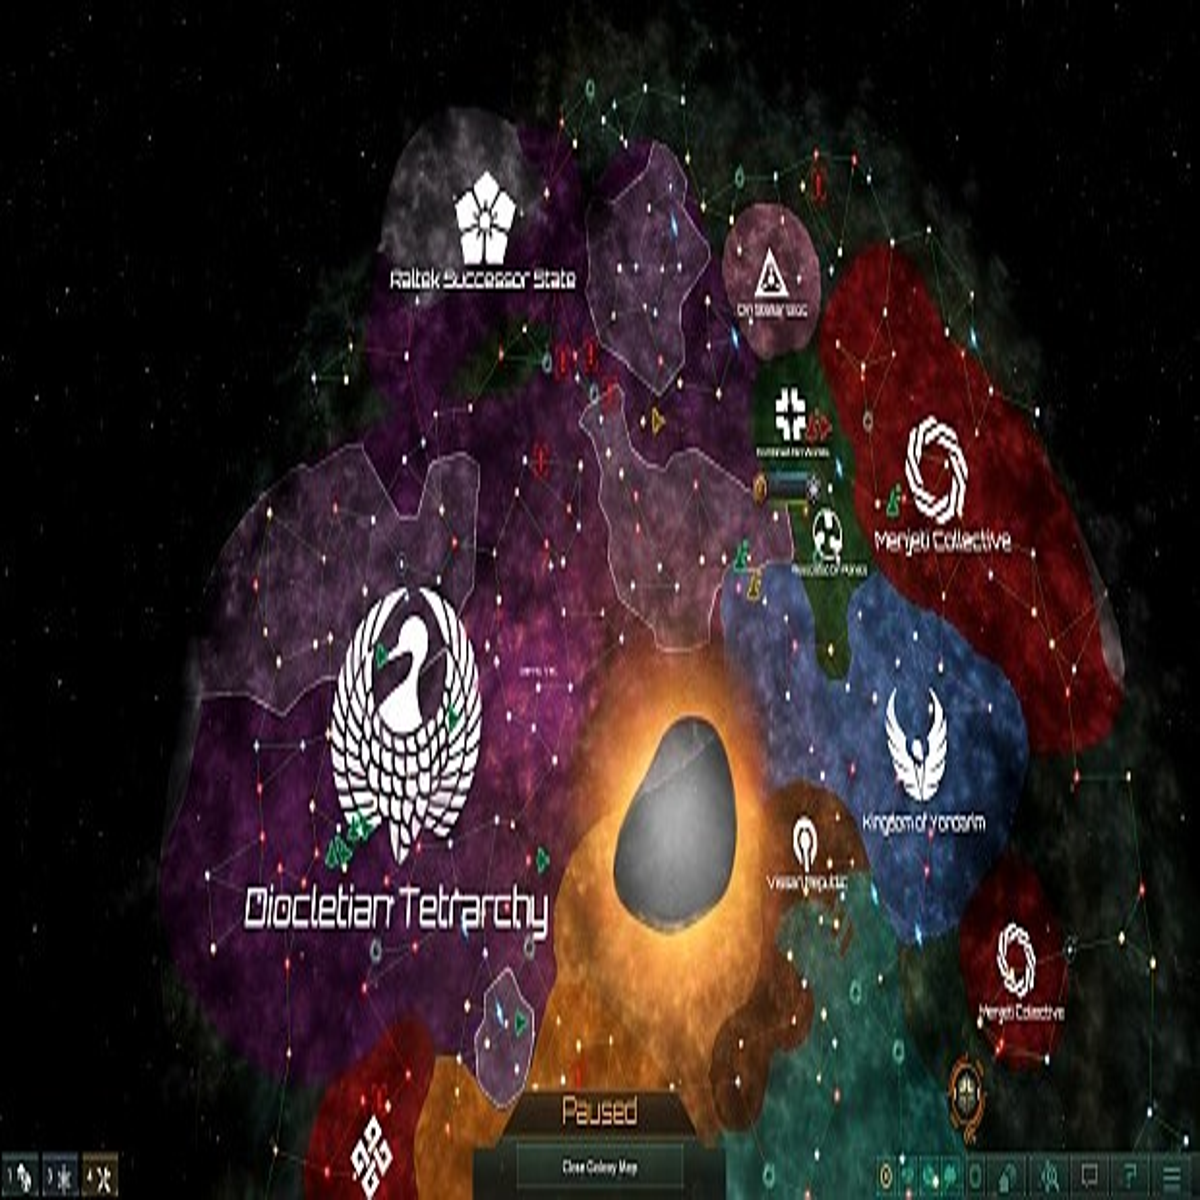 Stellaris Event Builder